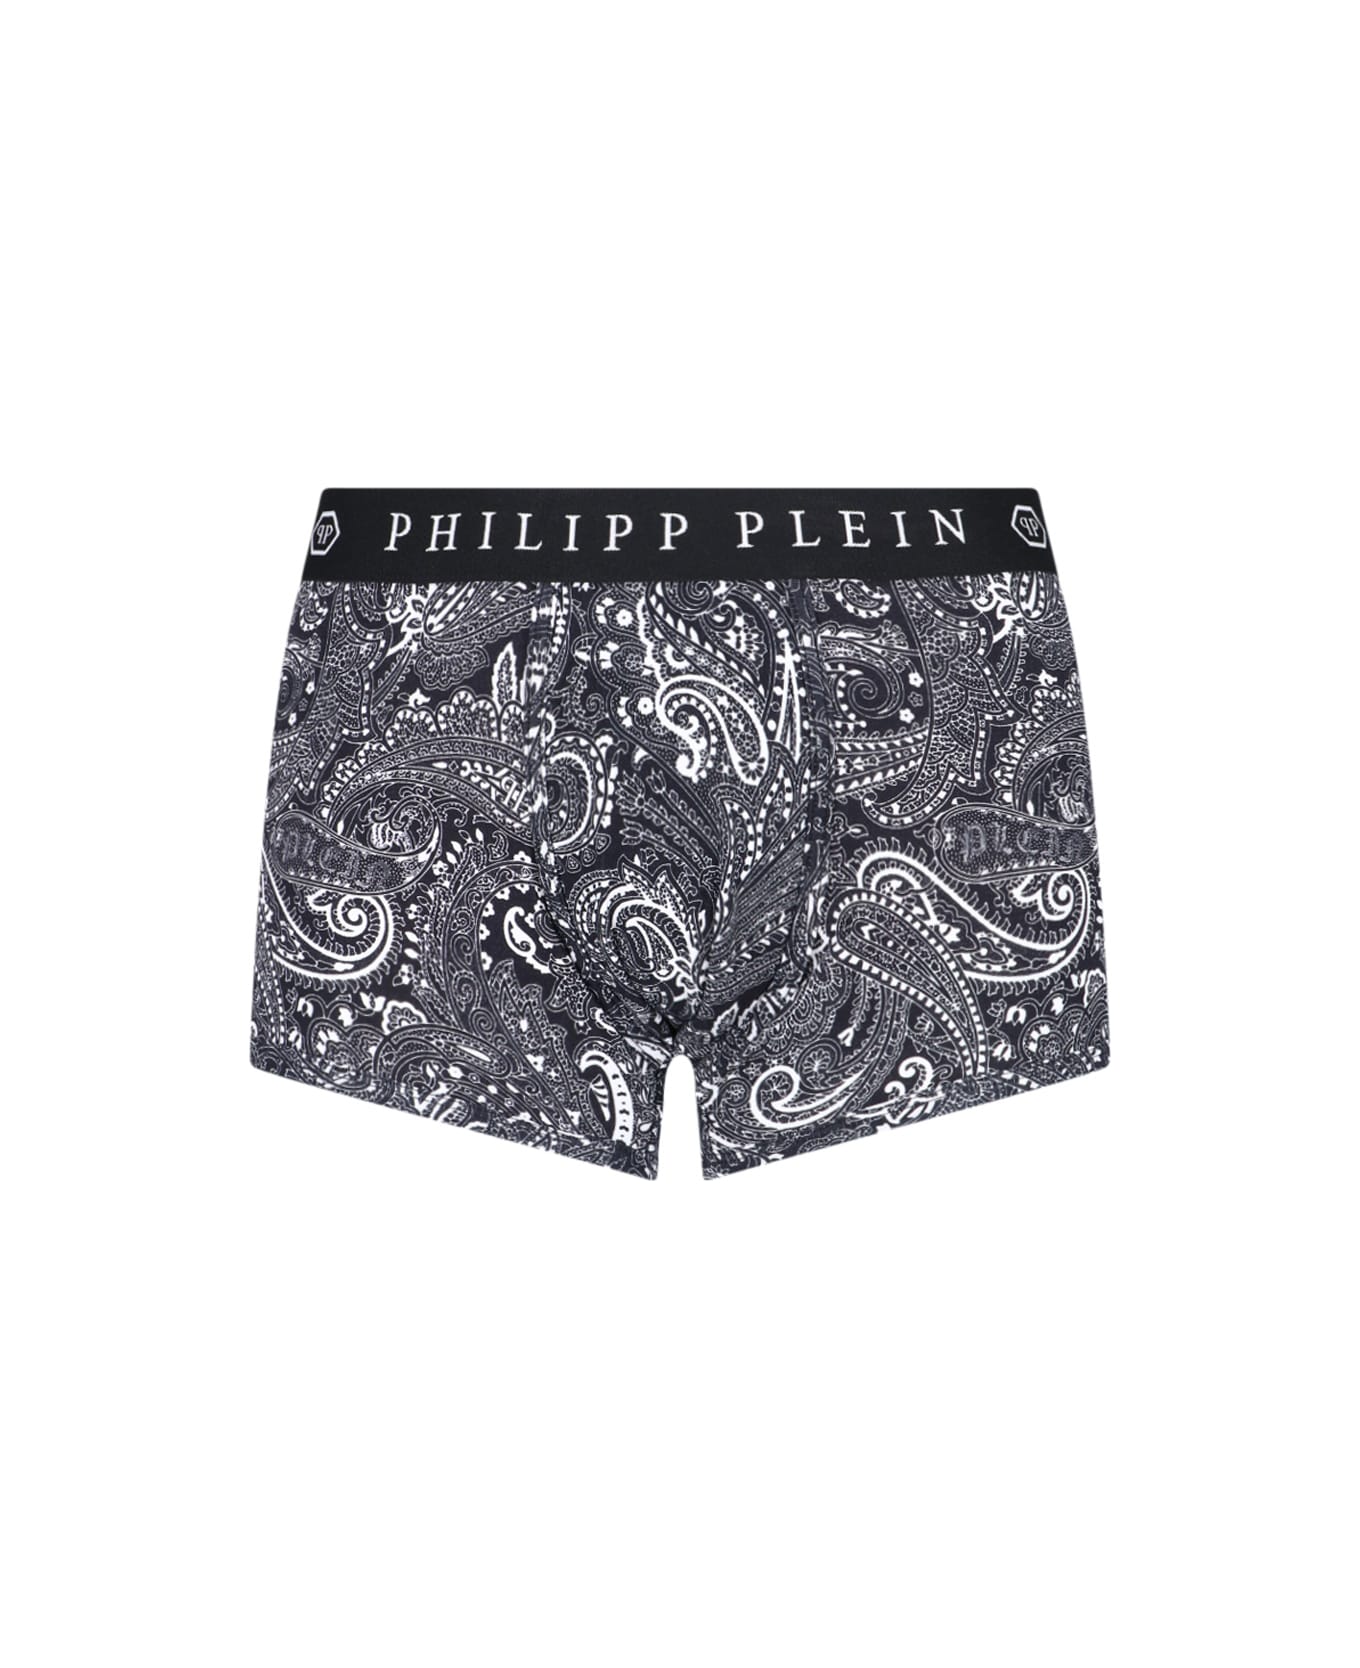 Philipp Plein "briefs" Boxers - White